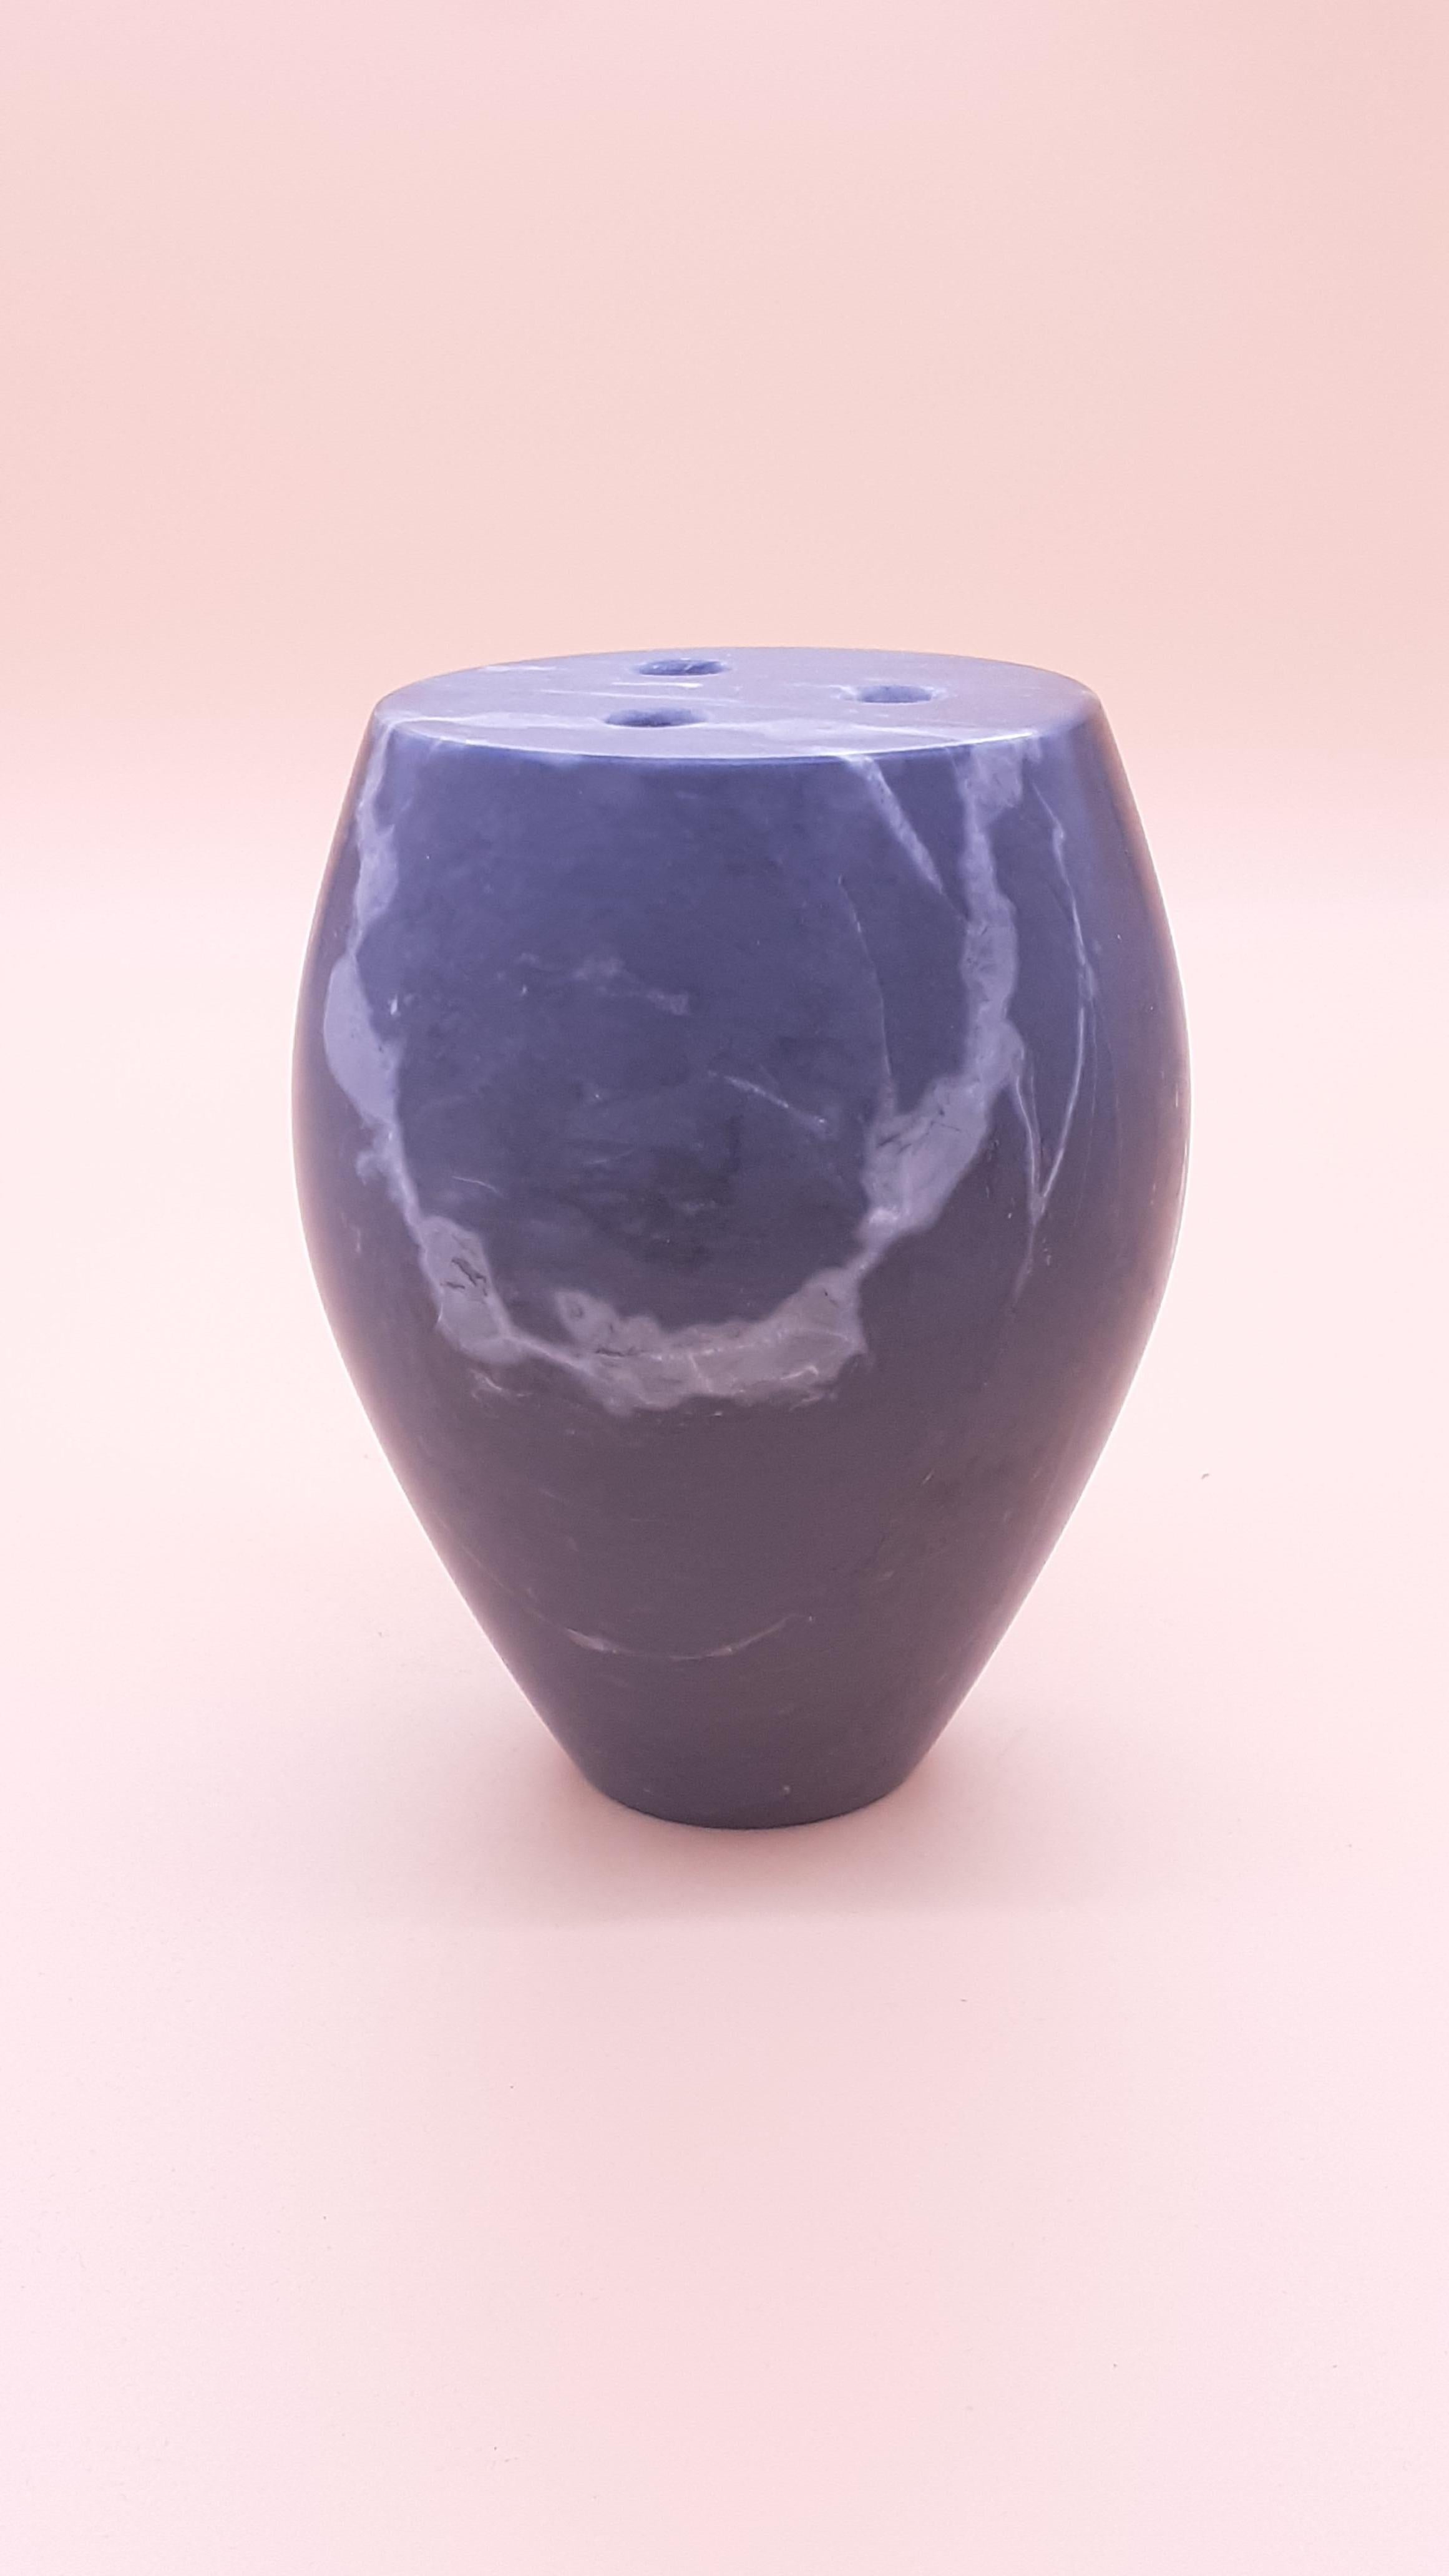 Marble Vase designed by Feix & Merlin.

Size: Diameter 9 x 14 height
Materials: Calacatta Carrara
Designed by: Feix & Merlin.